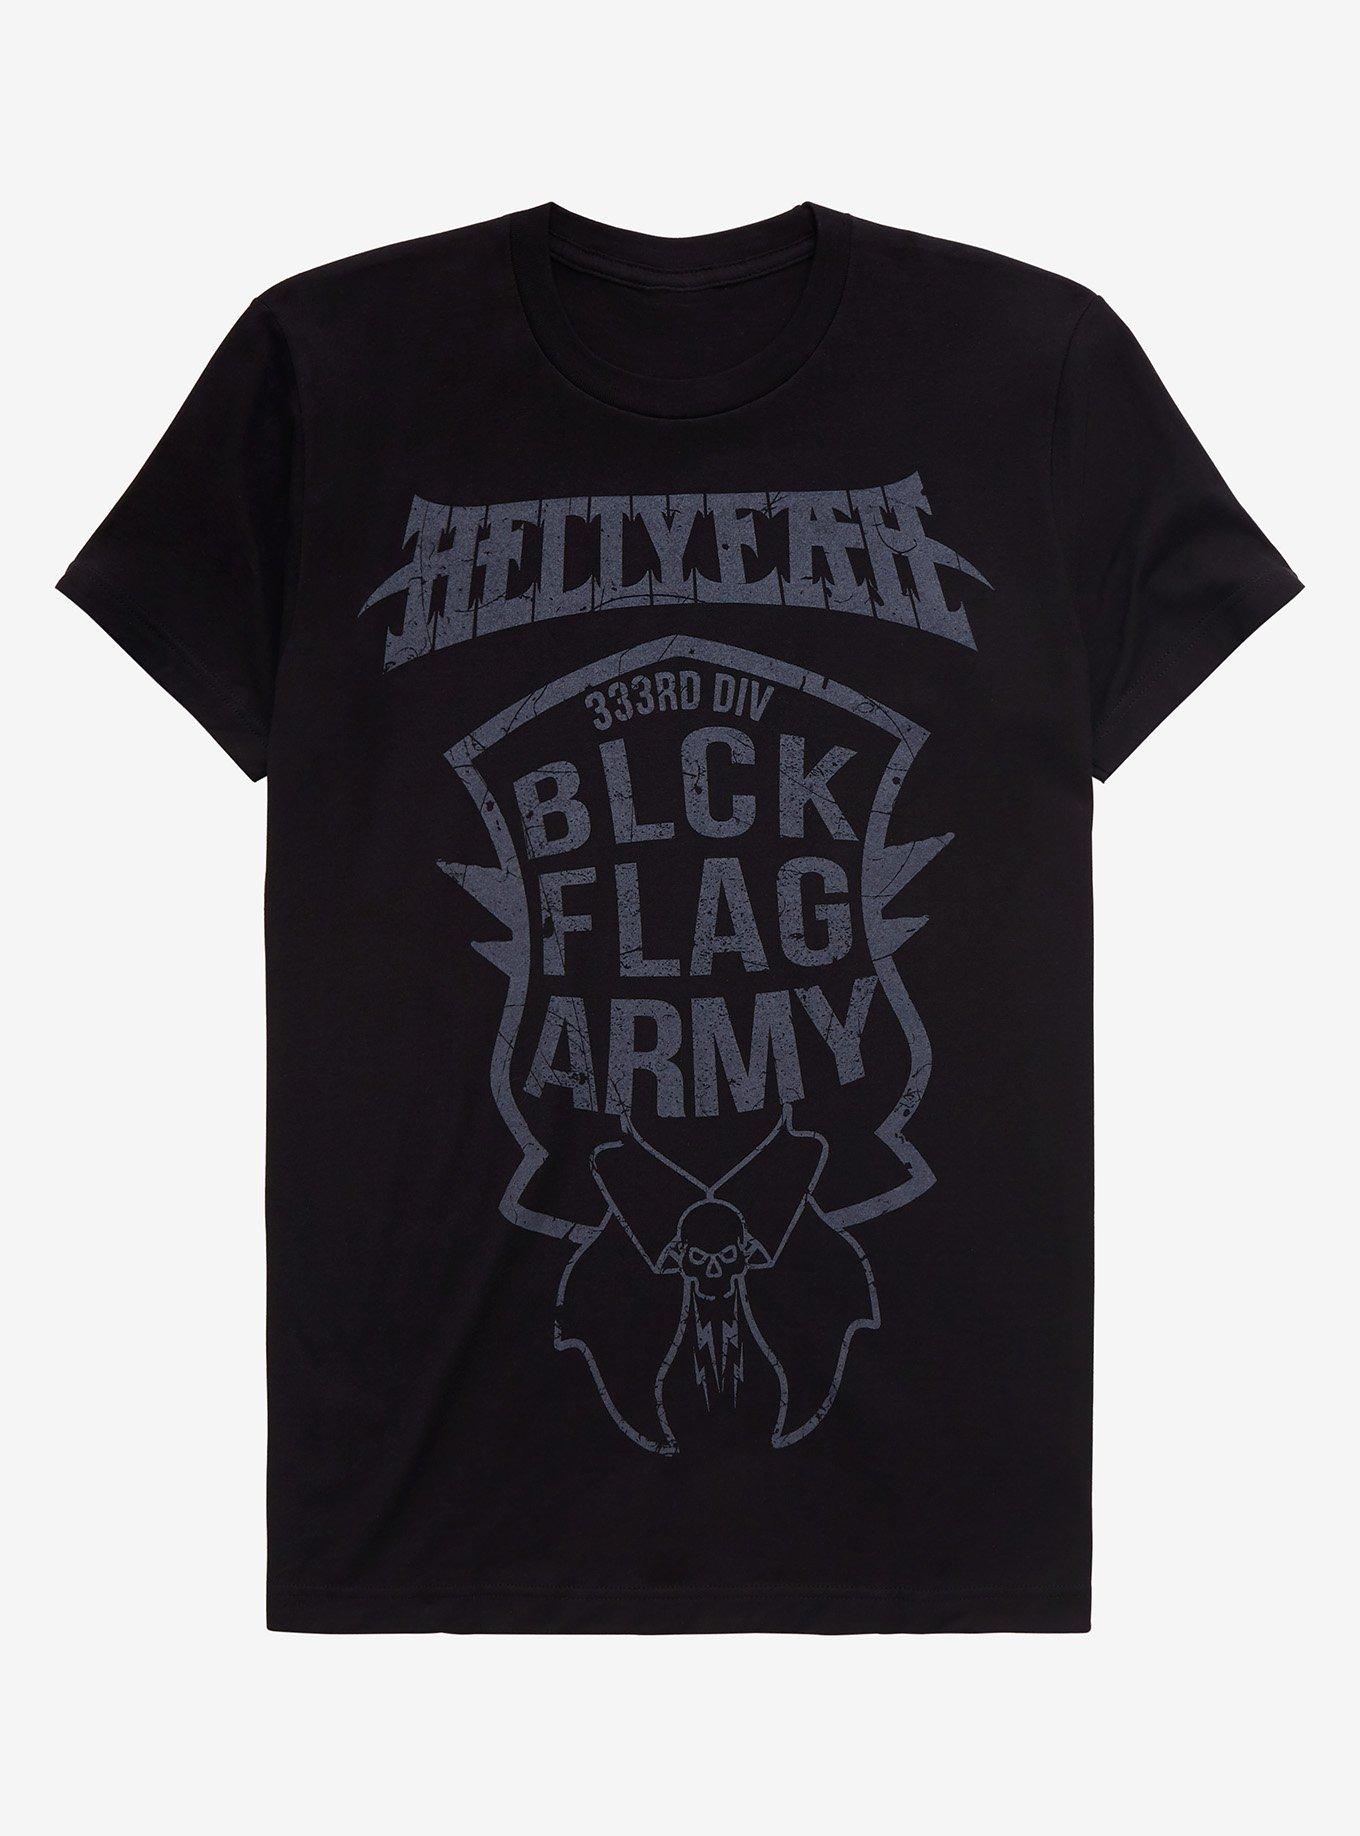 HELLYEAH Black Flag Army T-Shirt, BLACK, hi-res